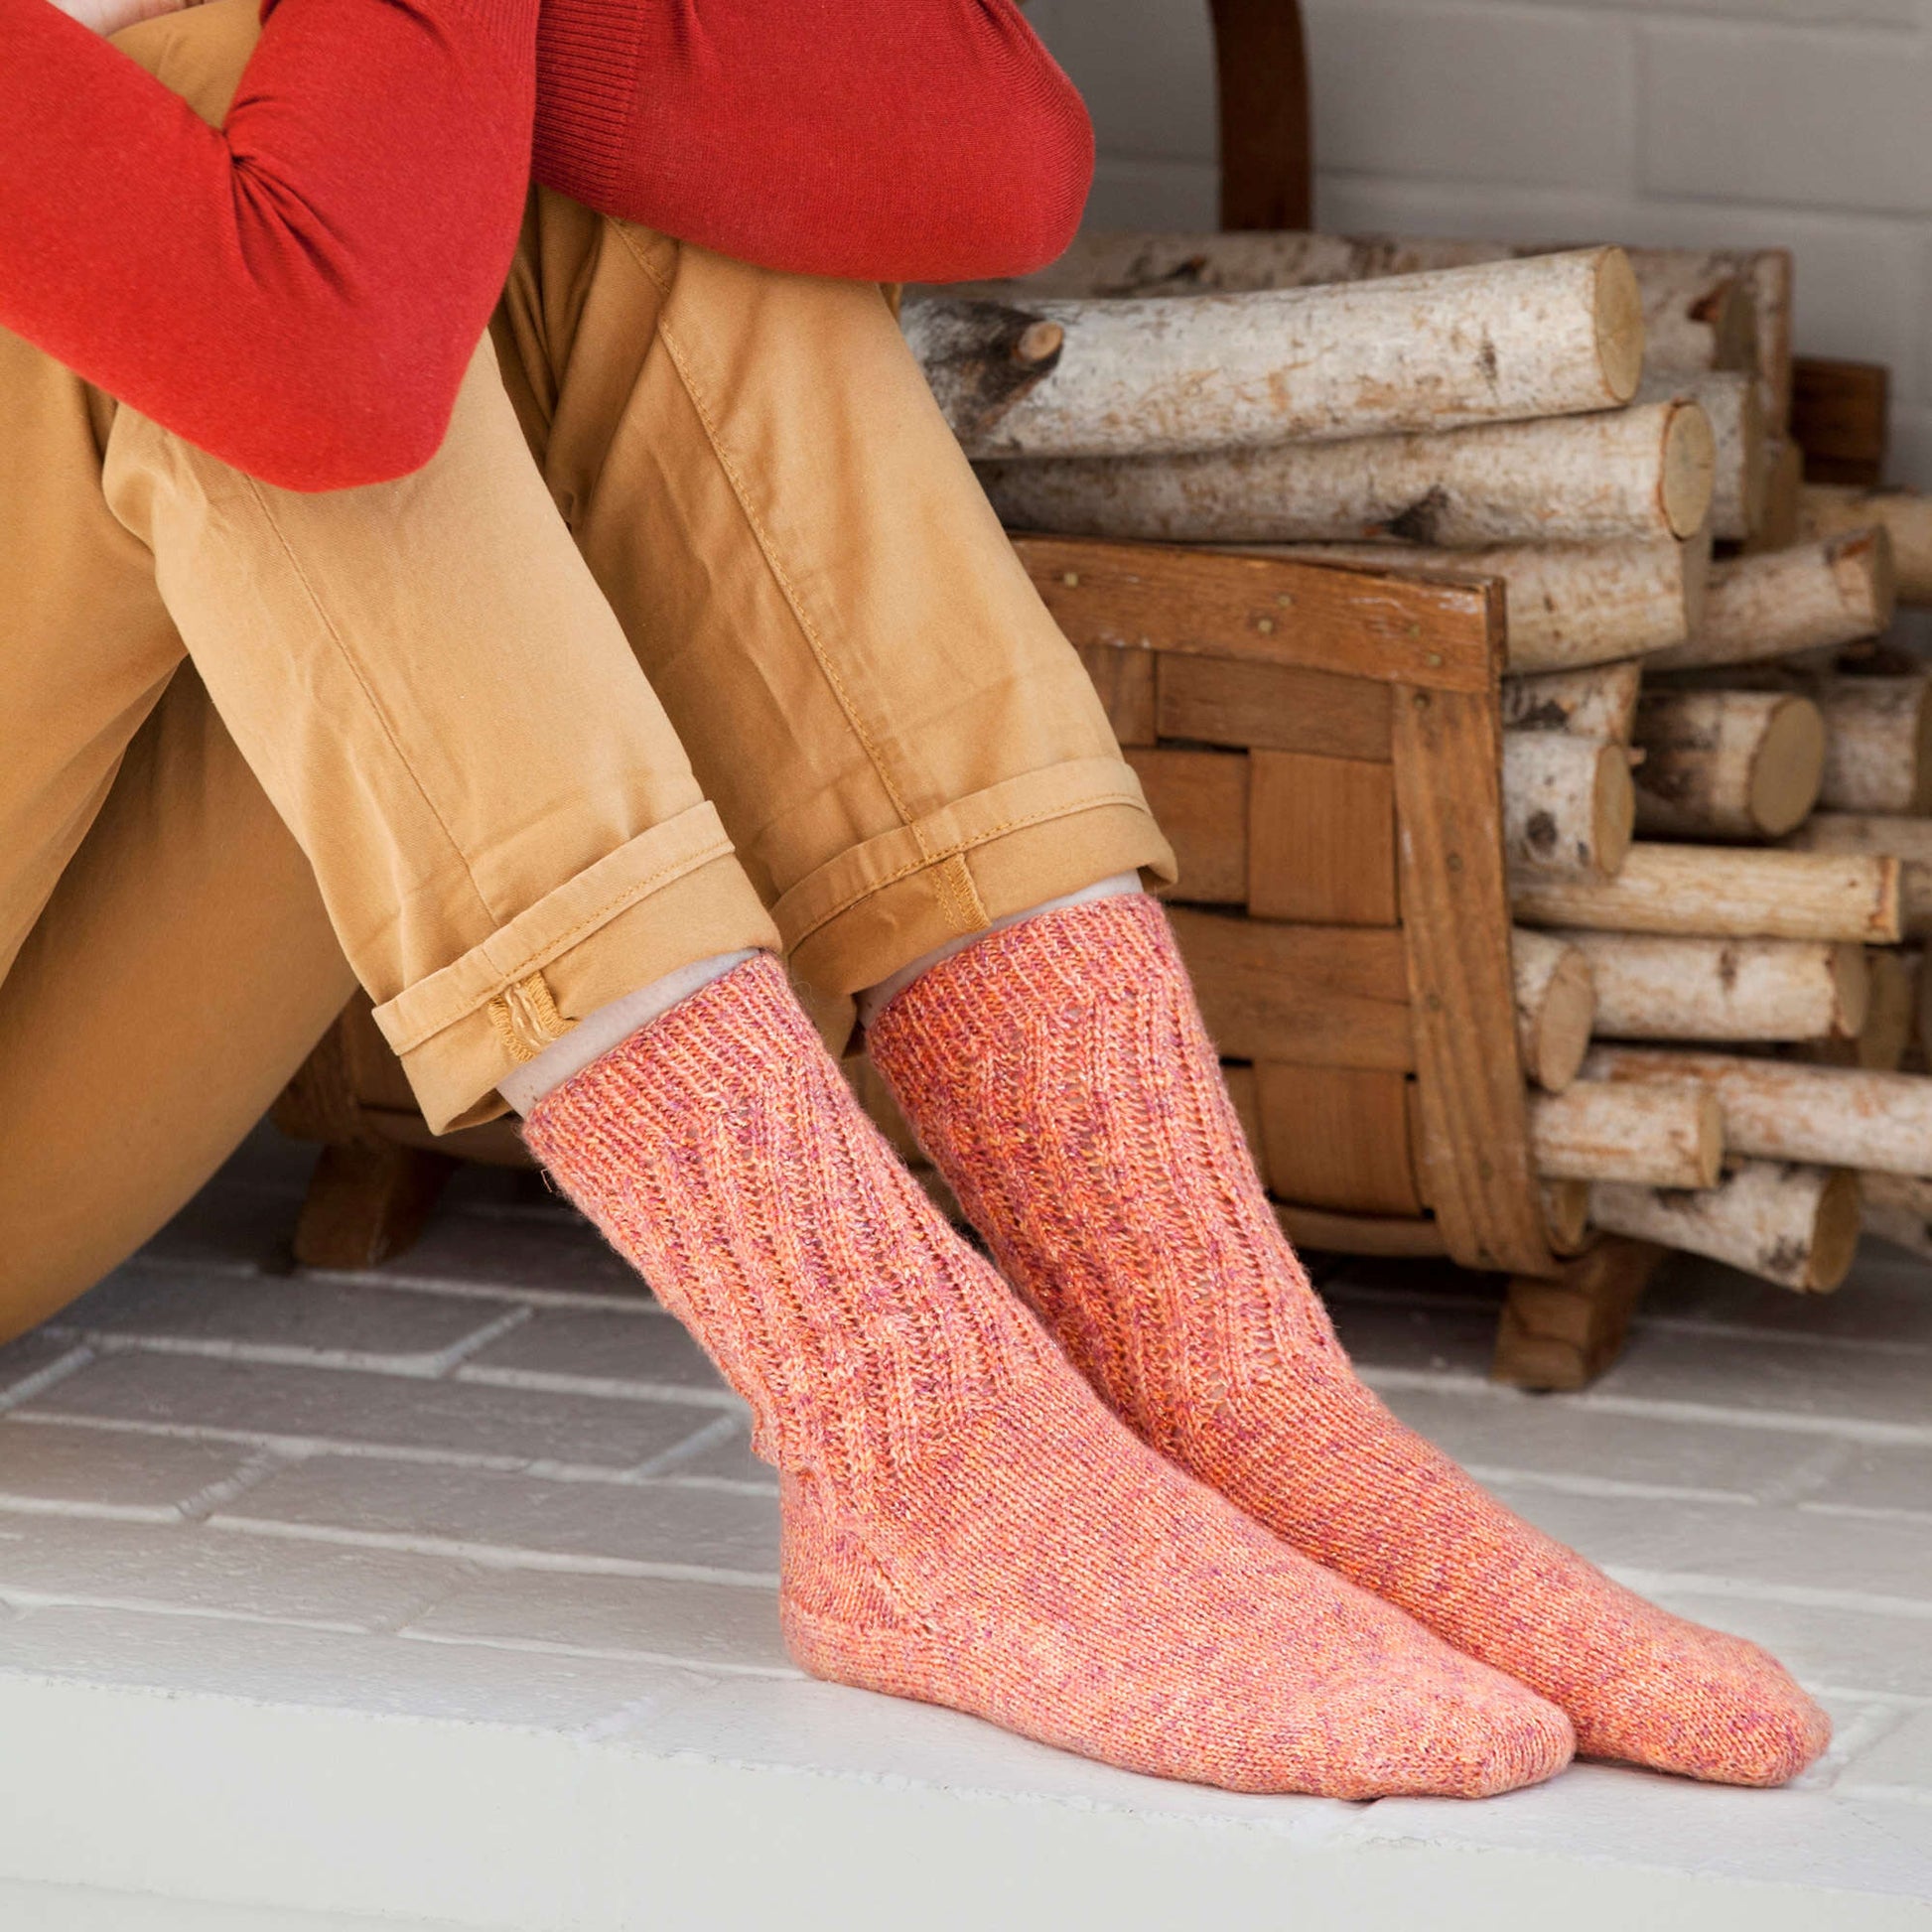 Free Red Heart Lacy Toe-Up Socks Knit Pattern